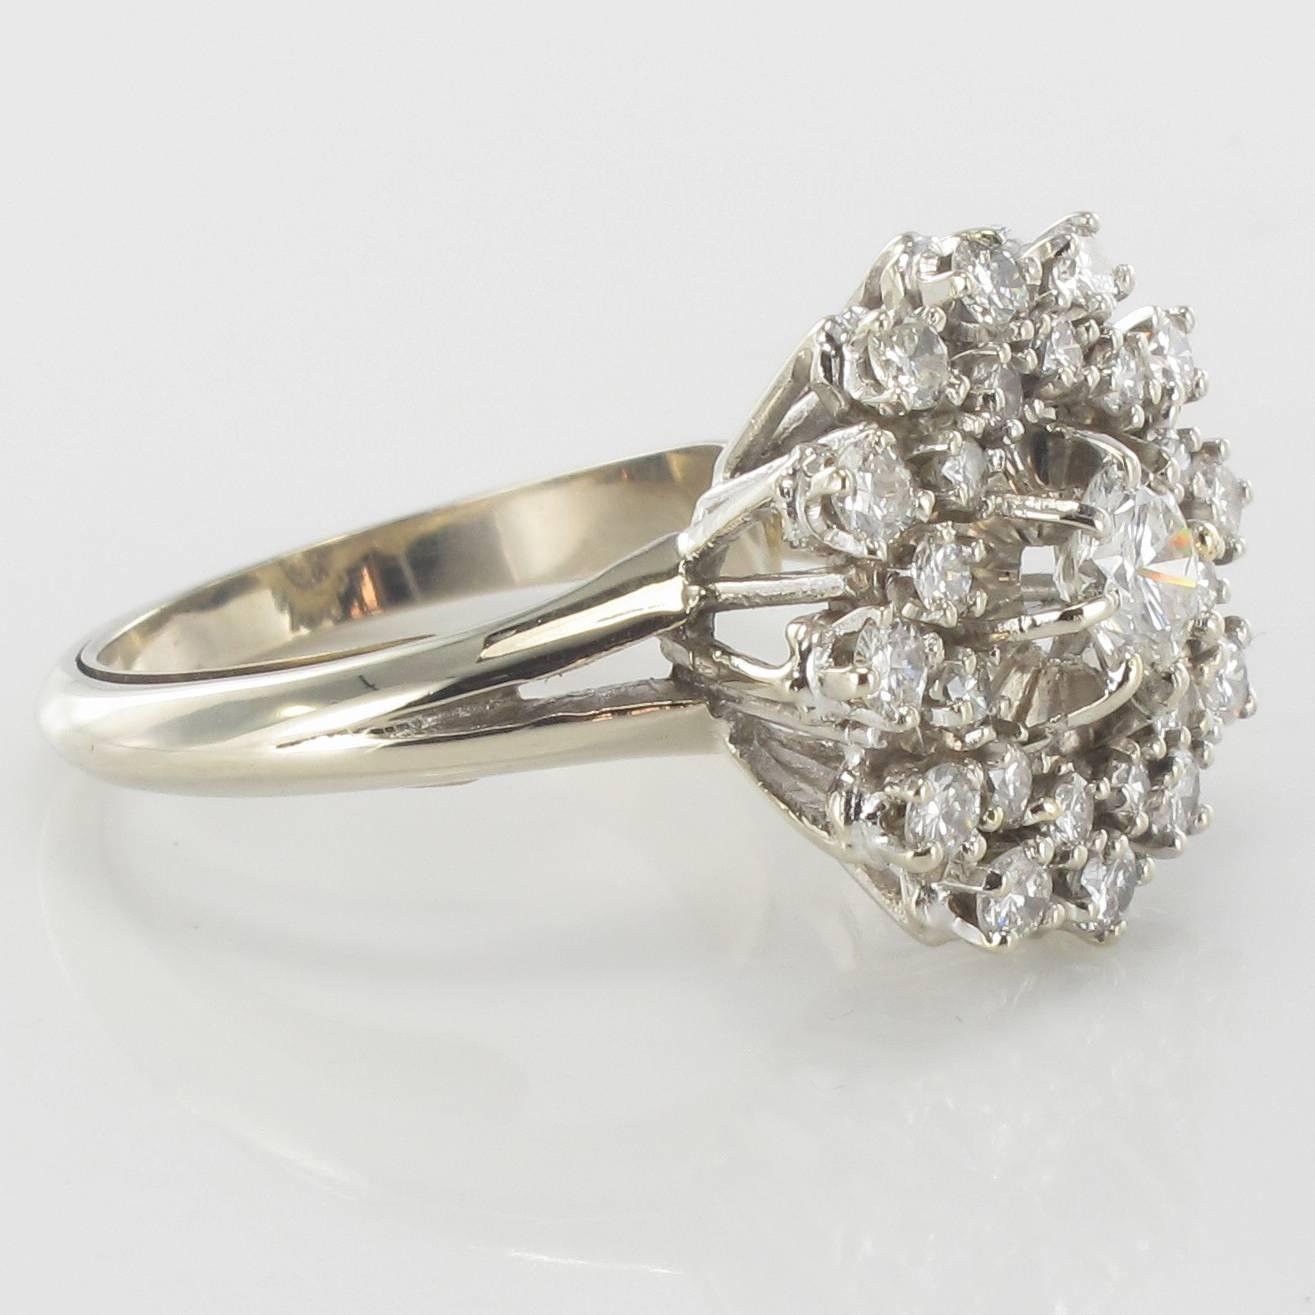 1960s diamond ring